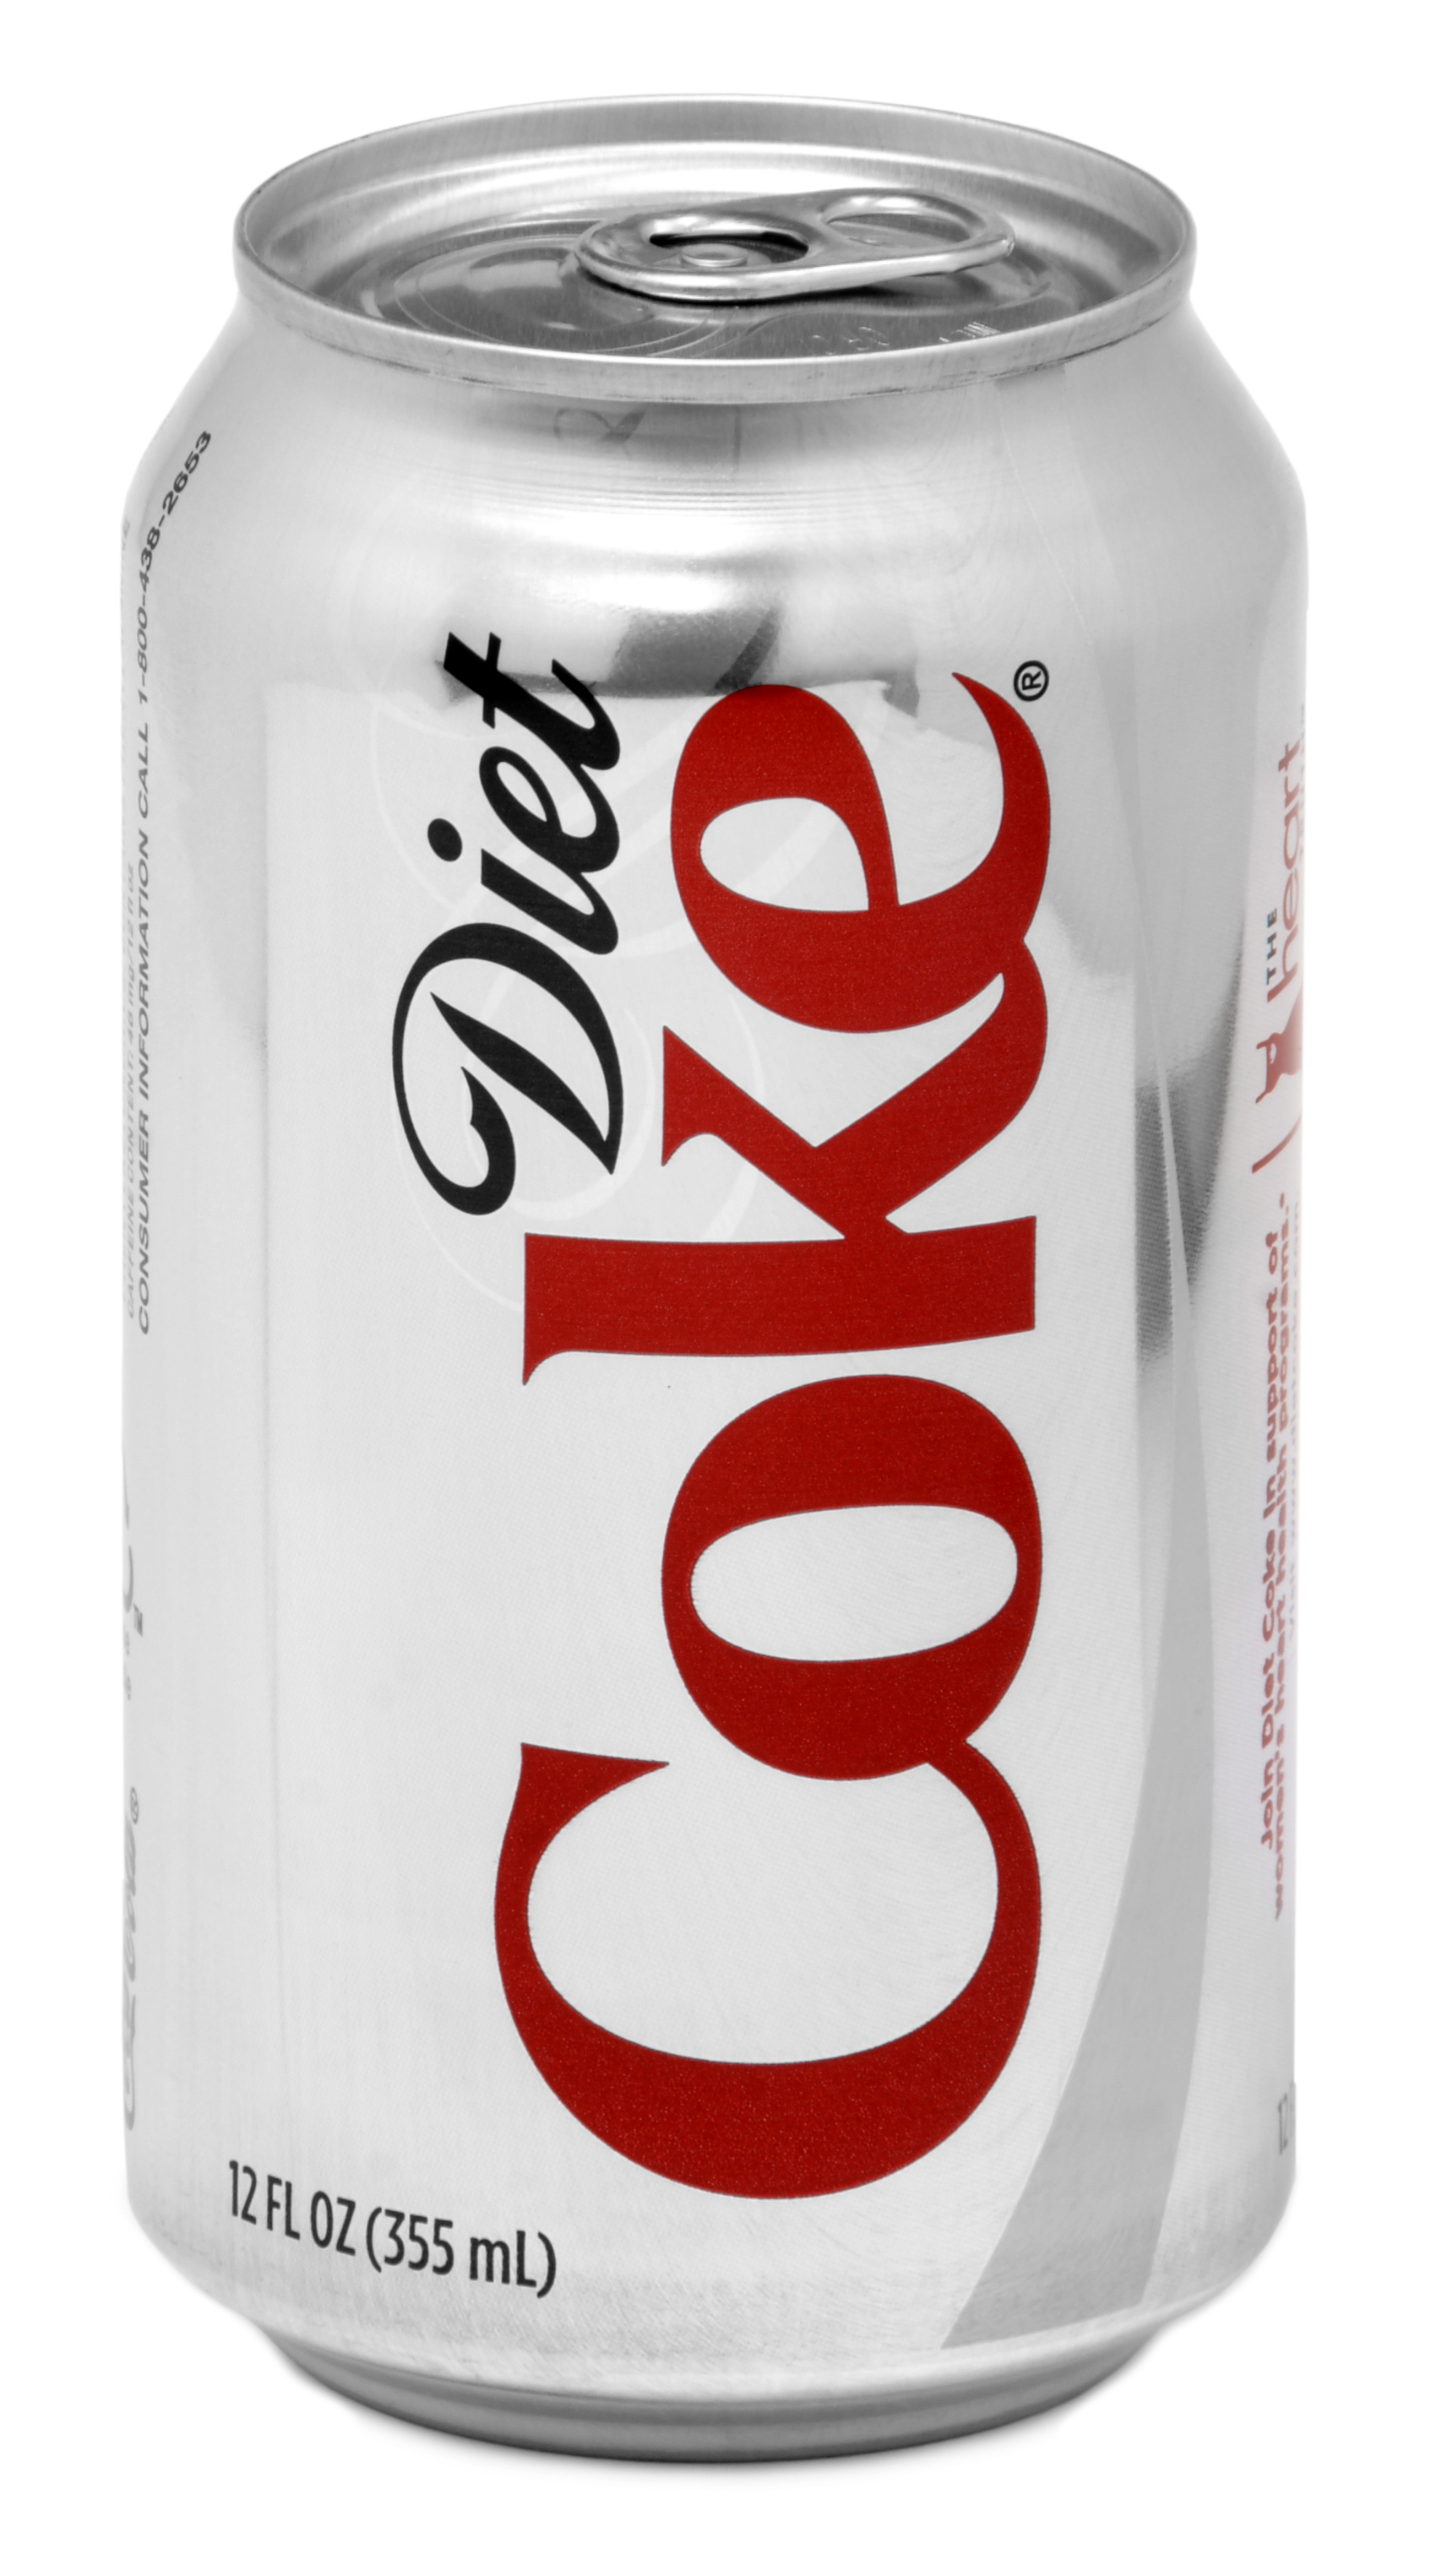 Description Diet Coke Can Jpg